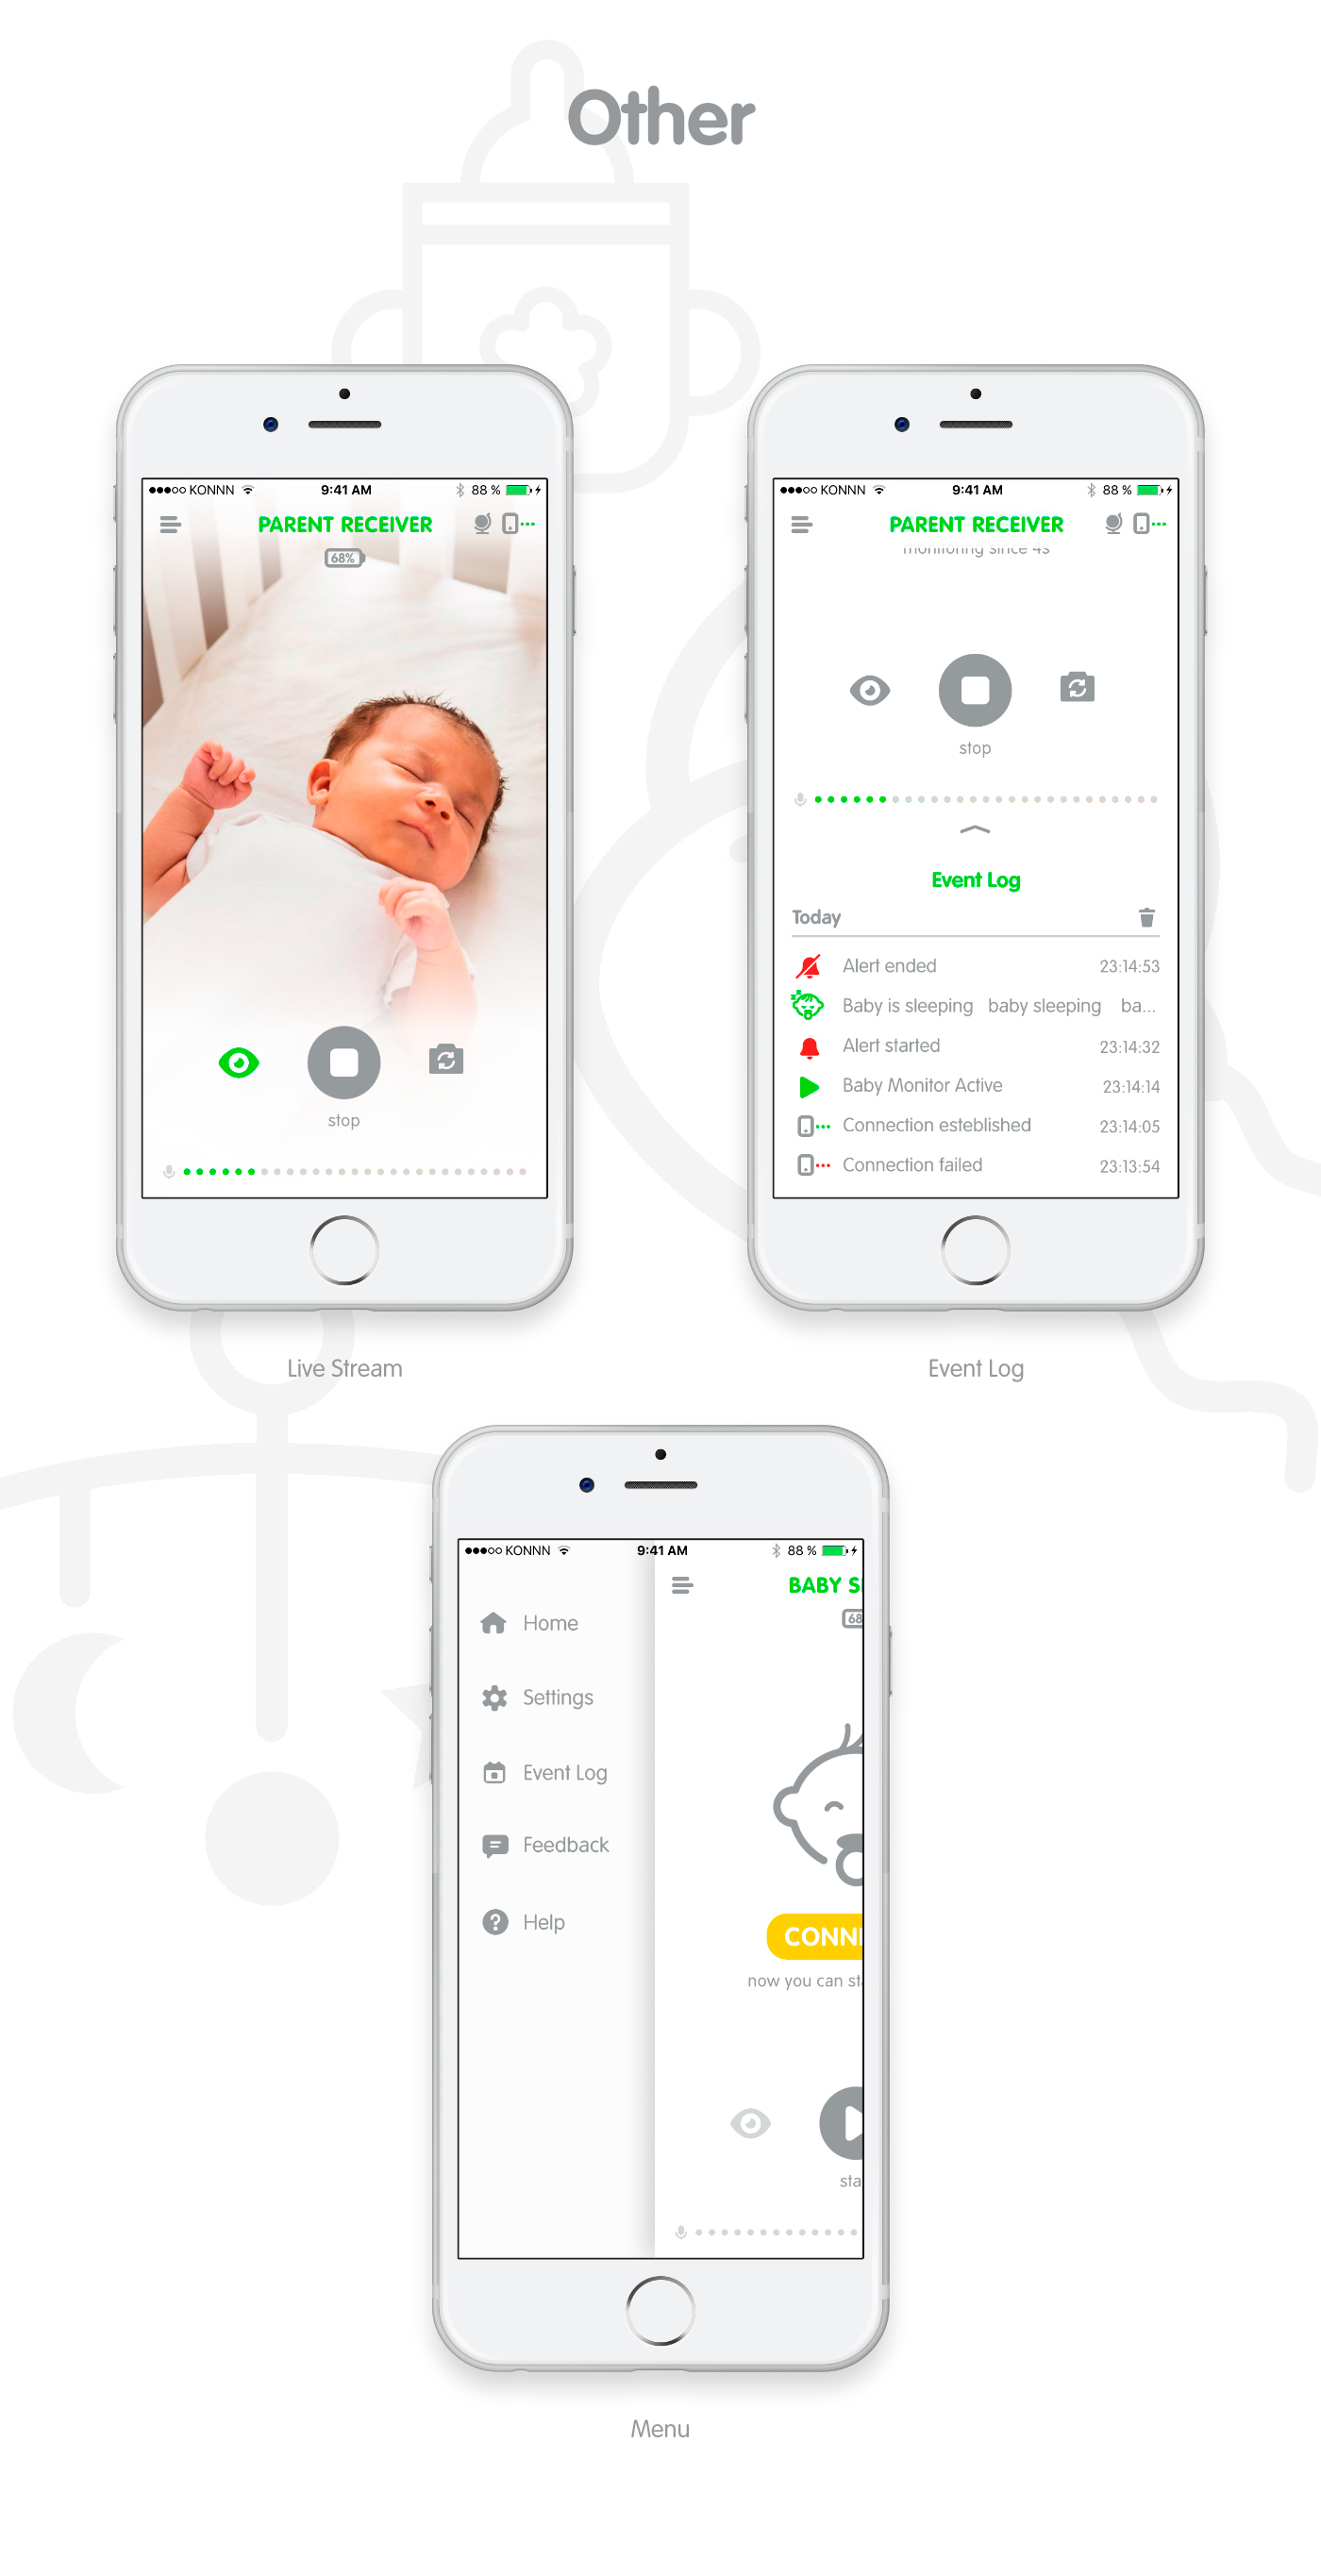 UI ui design ui mobile design ux baby Baby Monitoring baby sender konnn concept design